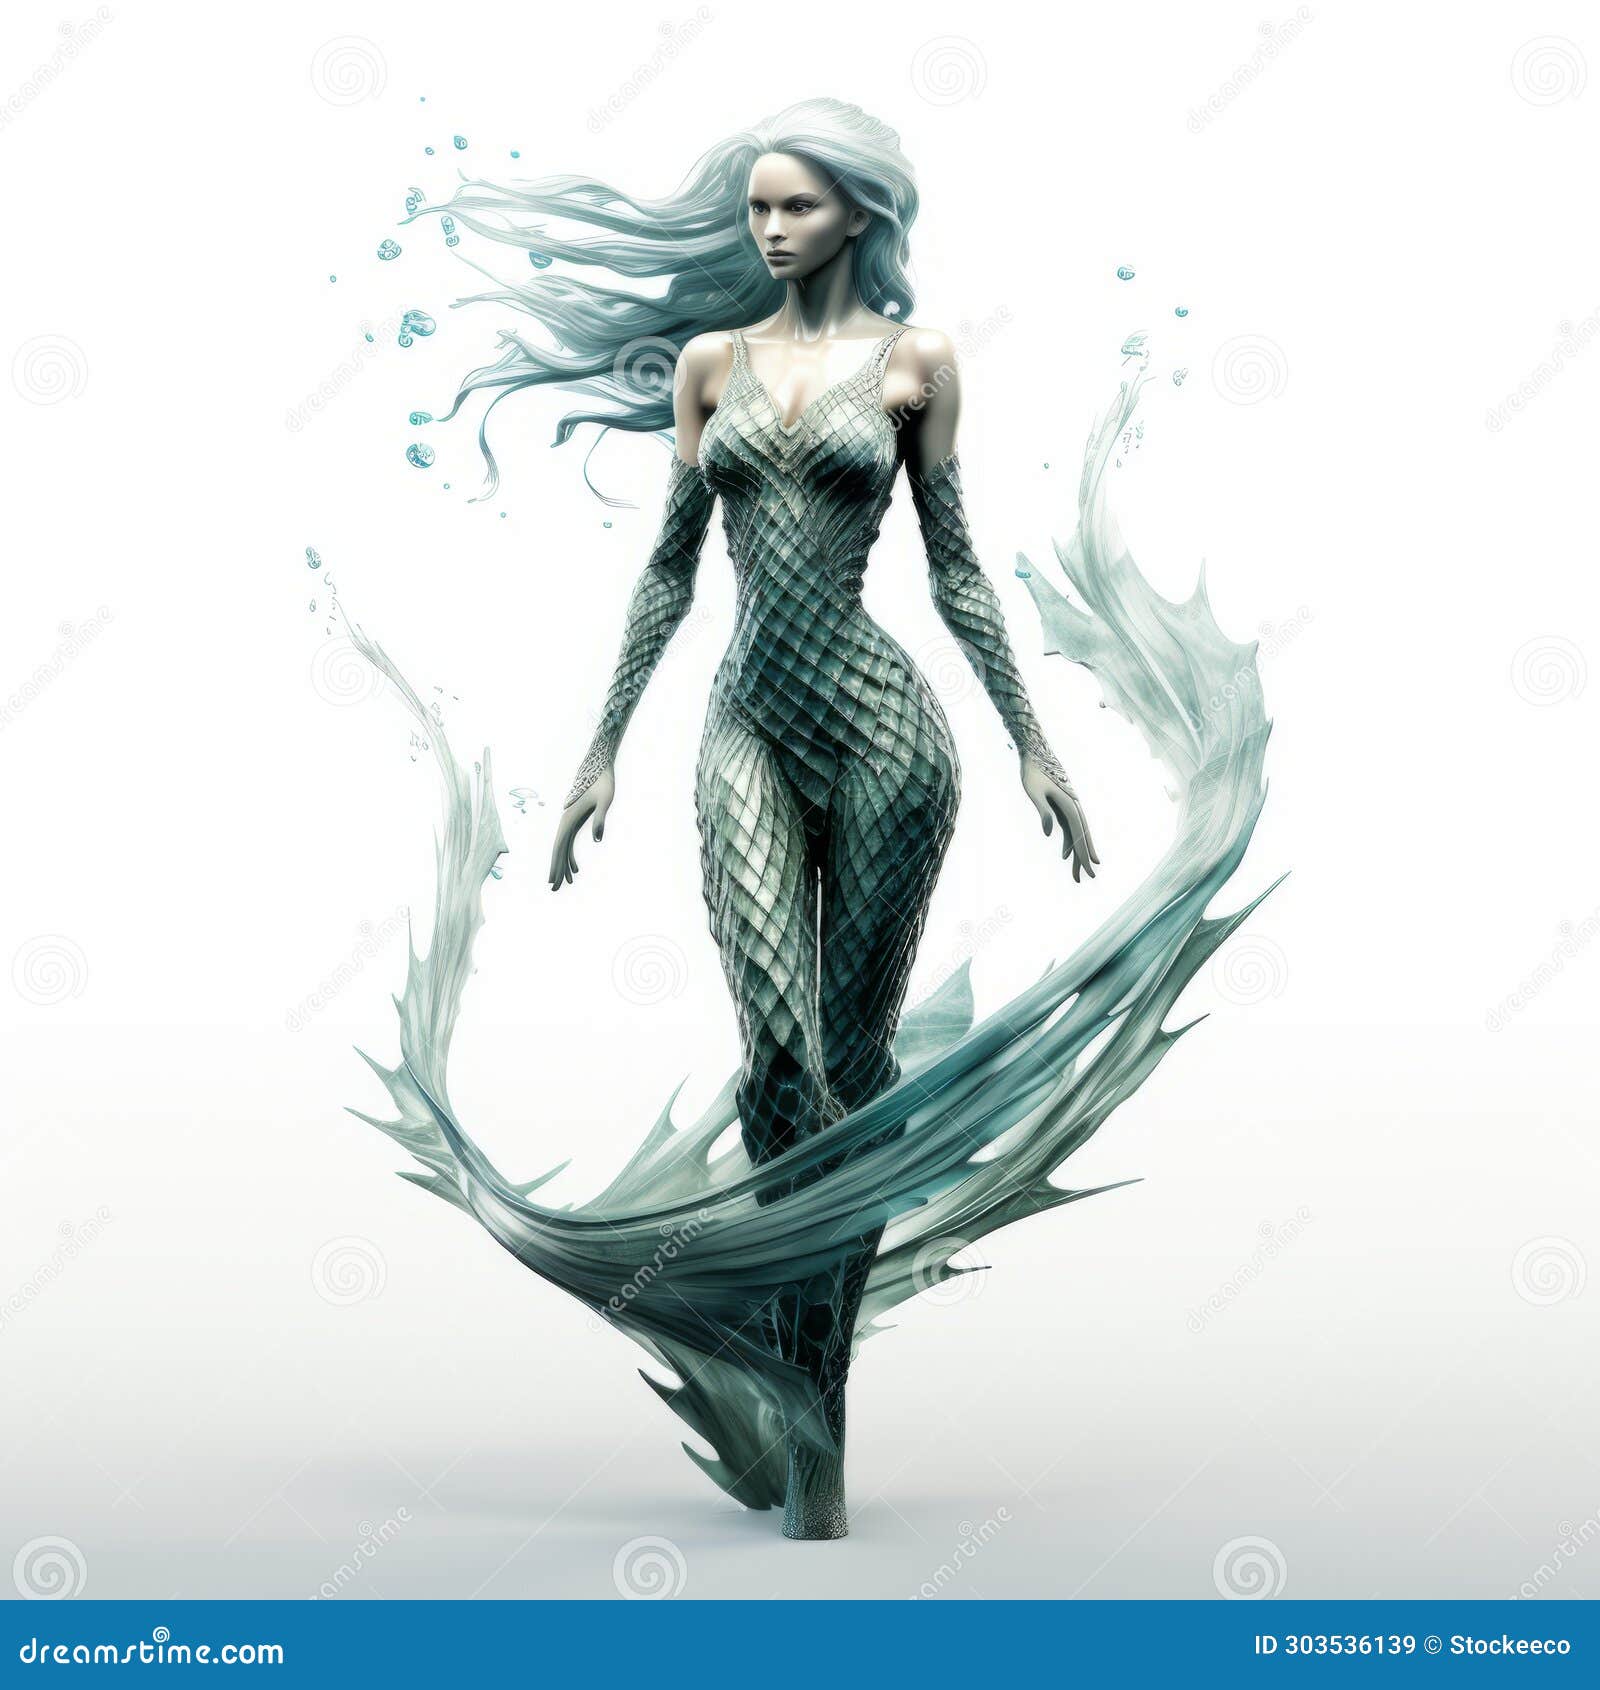 3d siren mermaid in gareth pugh style - xbox 360 graphics